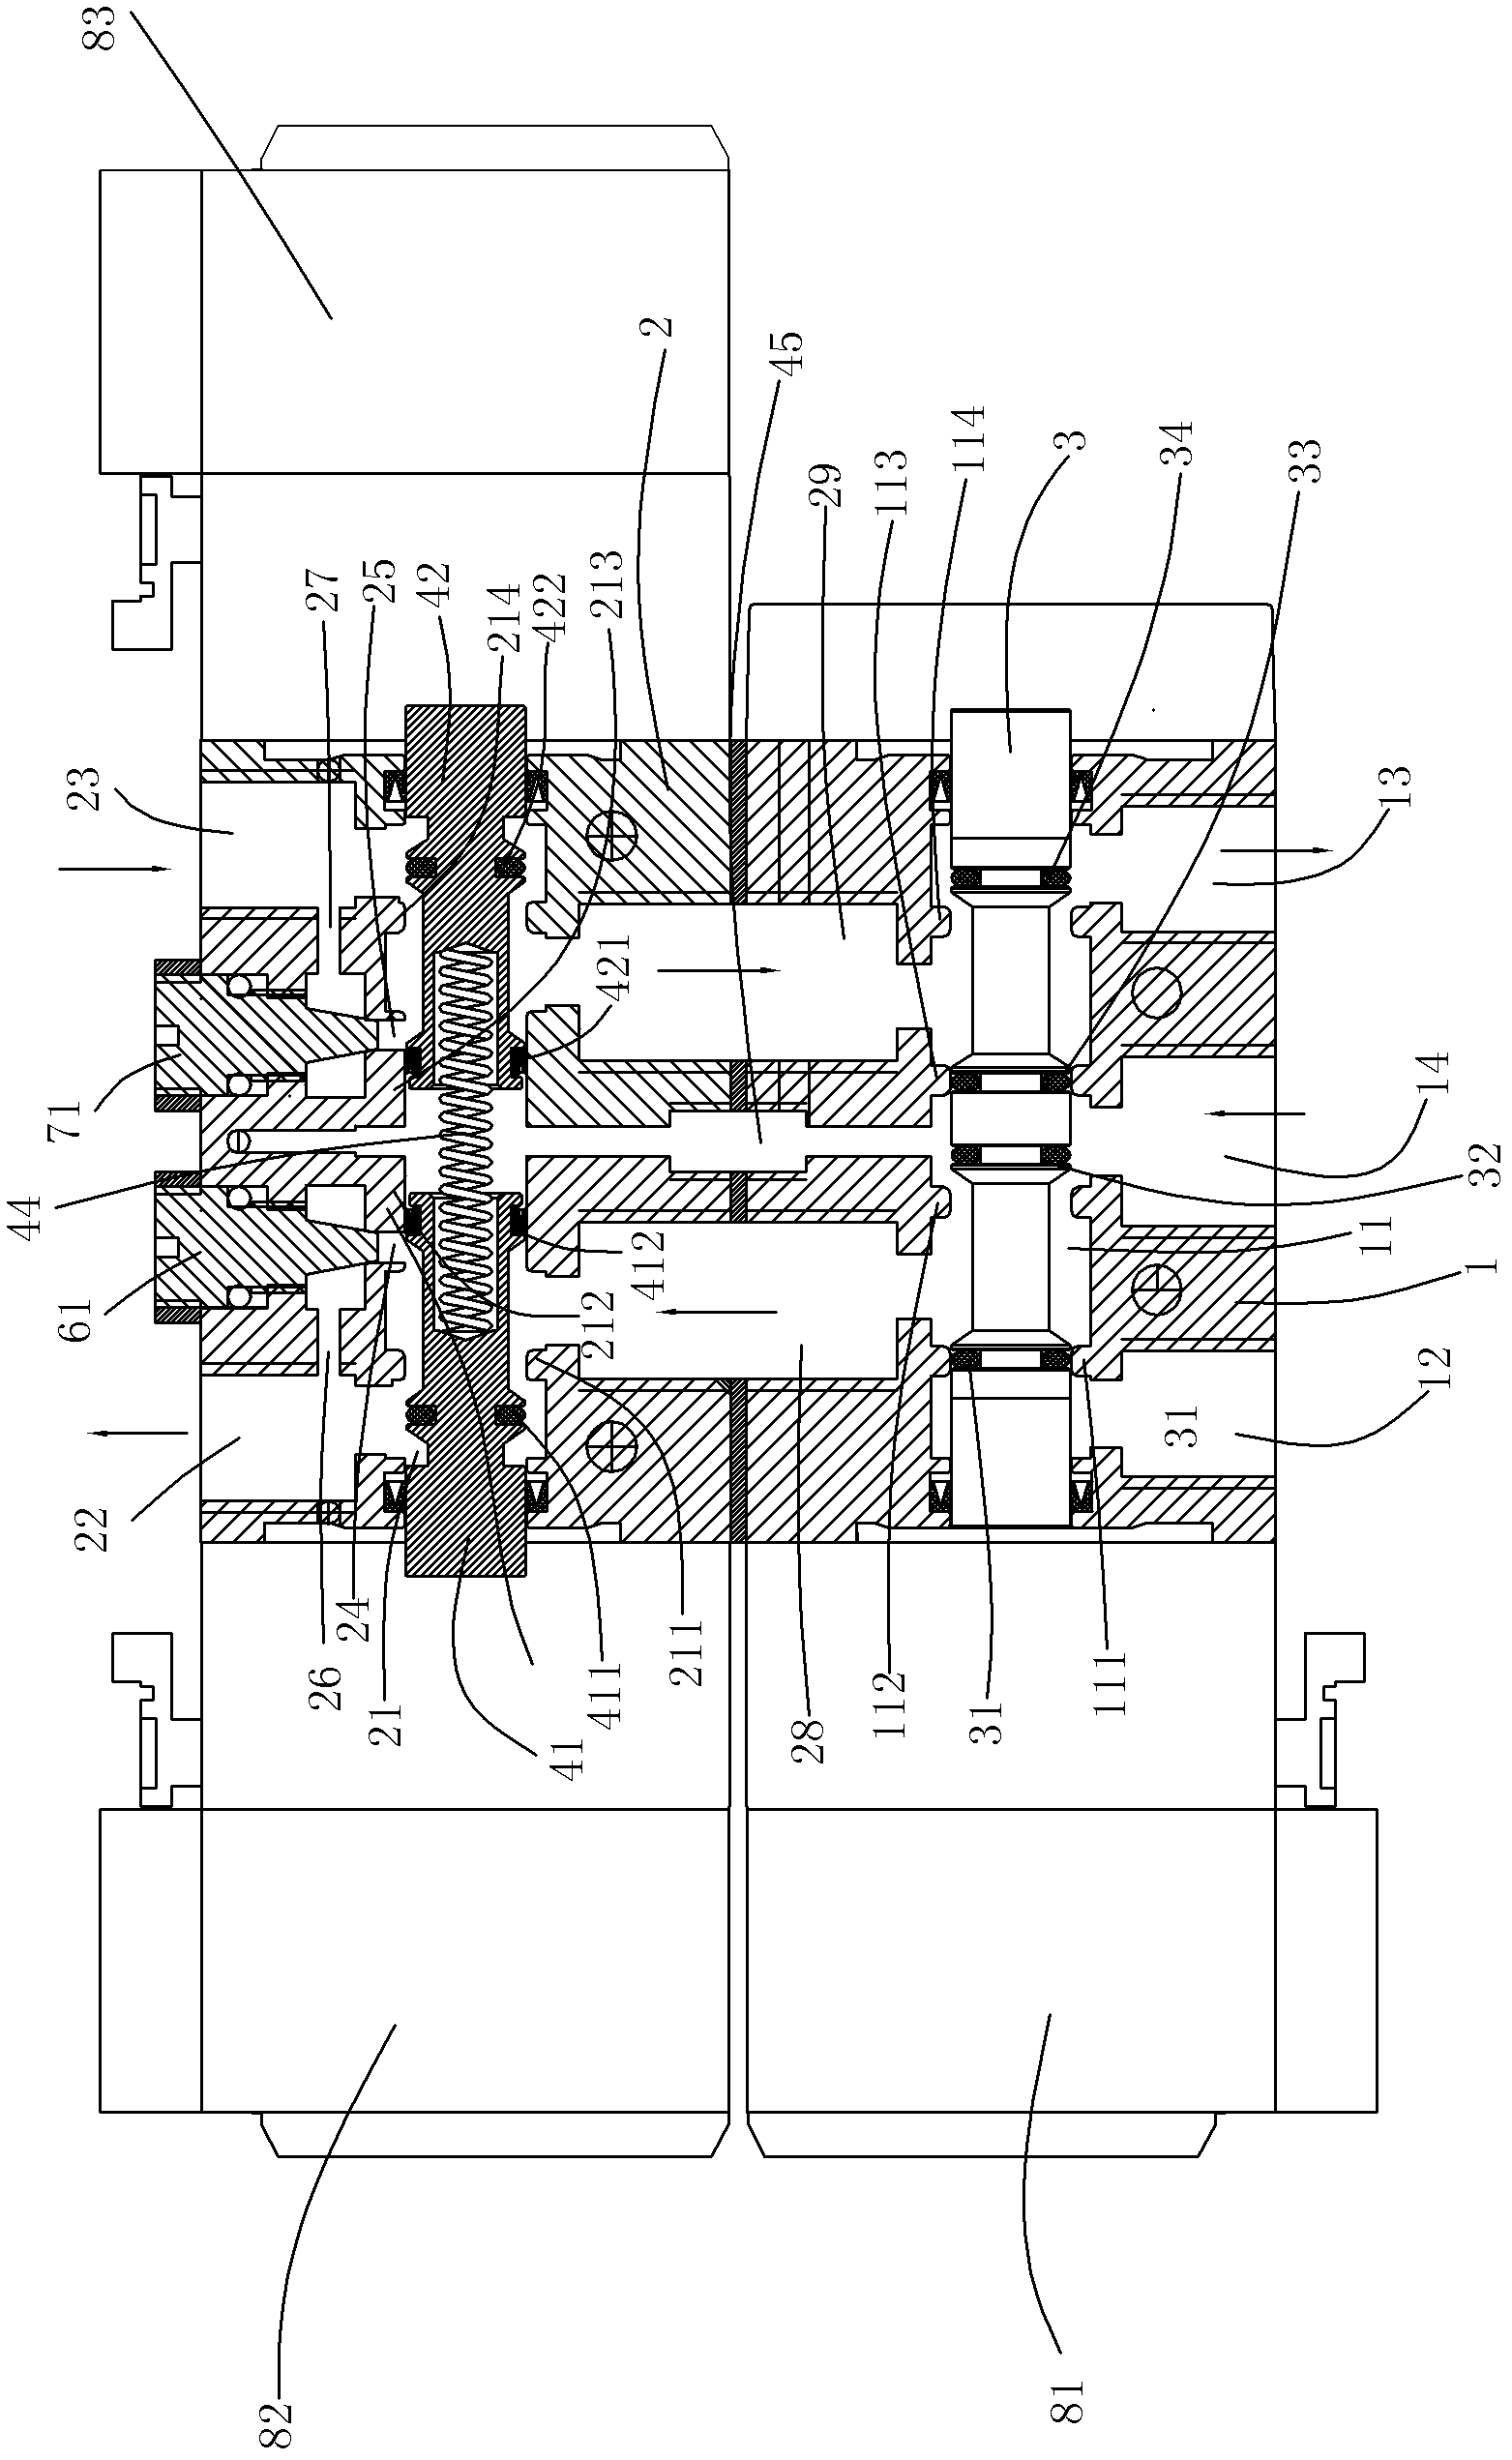 Structure of reversing valve